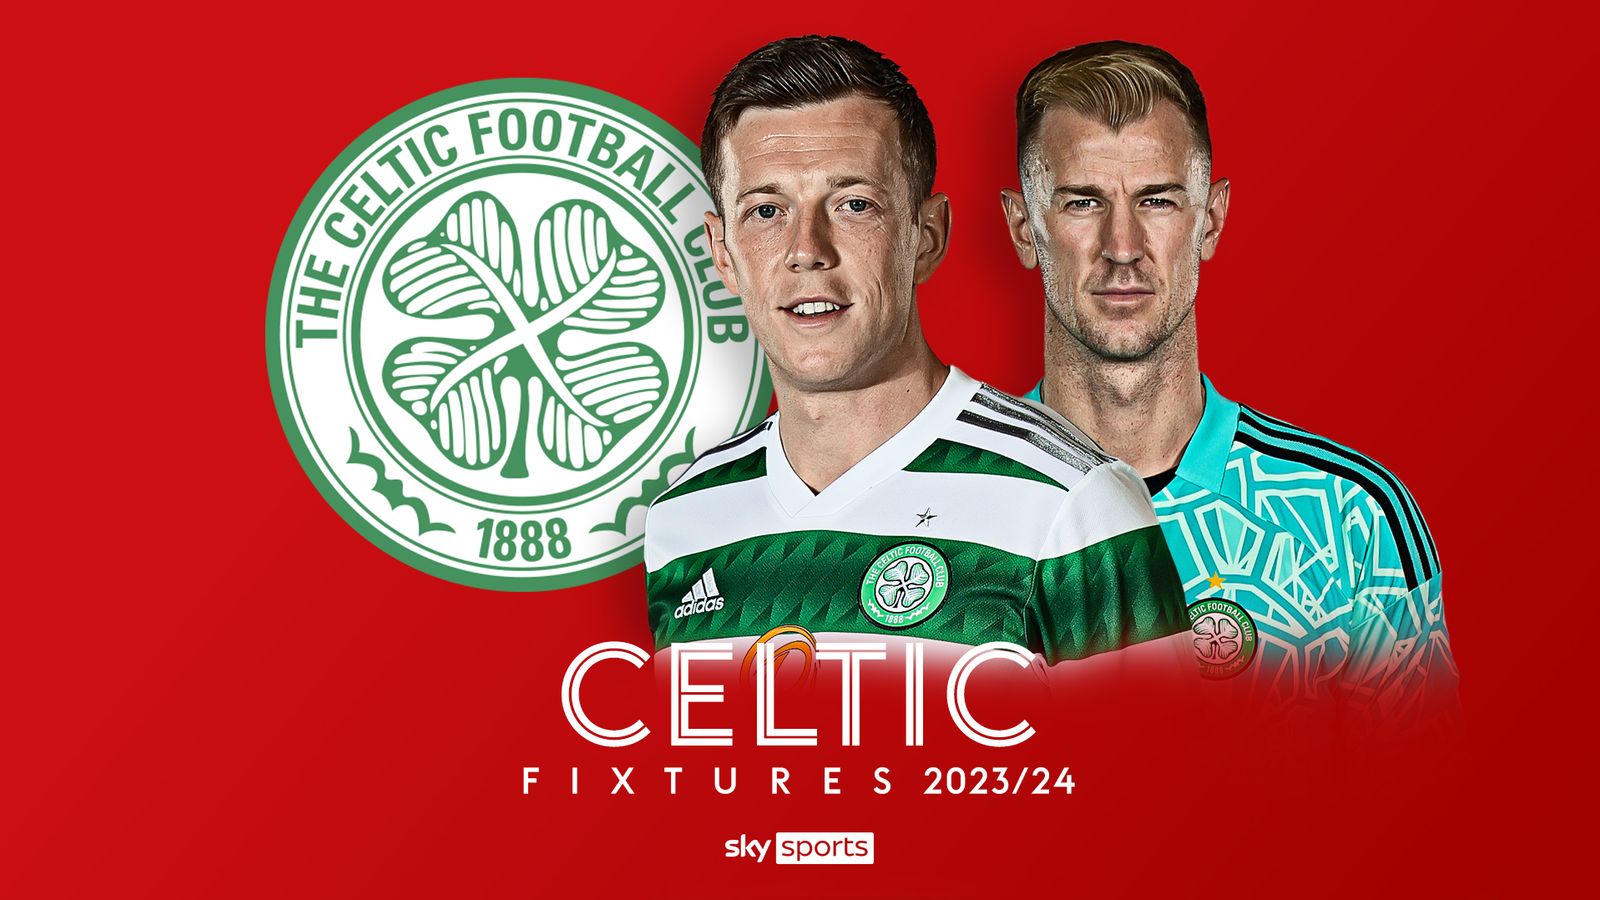 Hocmarketing Org Og 18344 Exciting Celtic Fixtures And Schedule Revealed For Scottish Premiership 202324 Season 